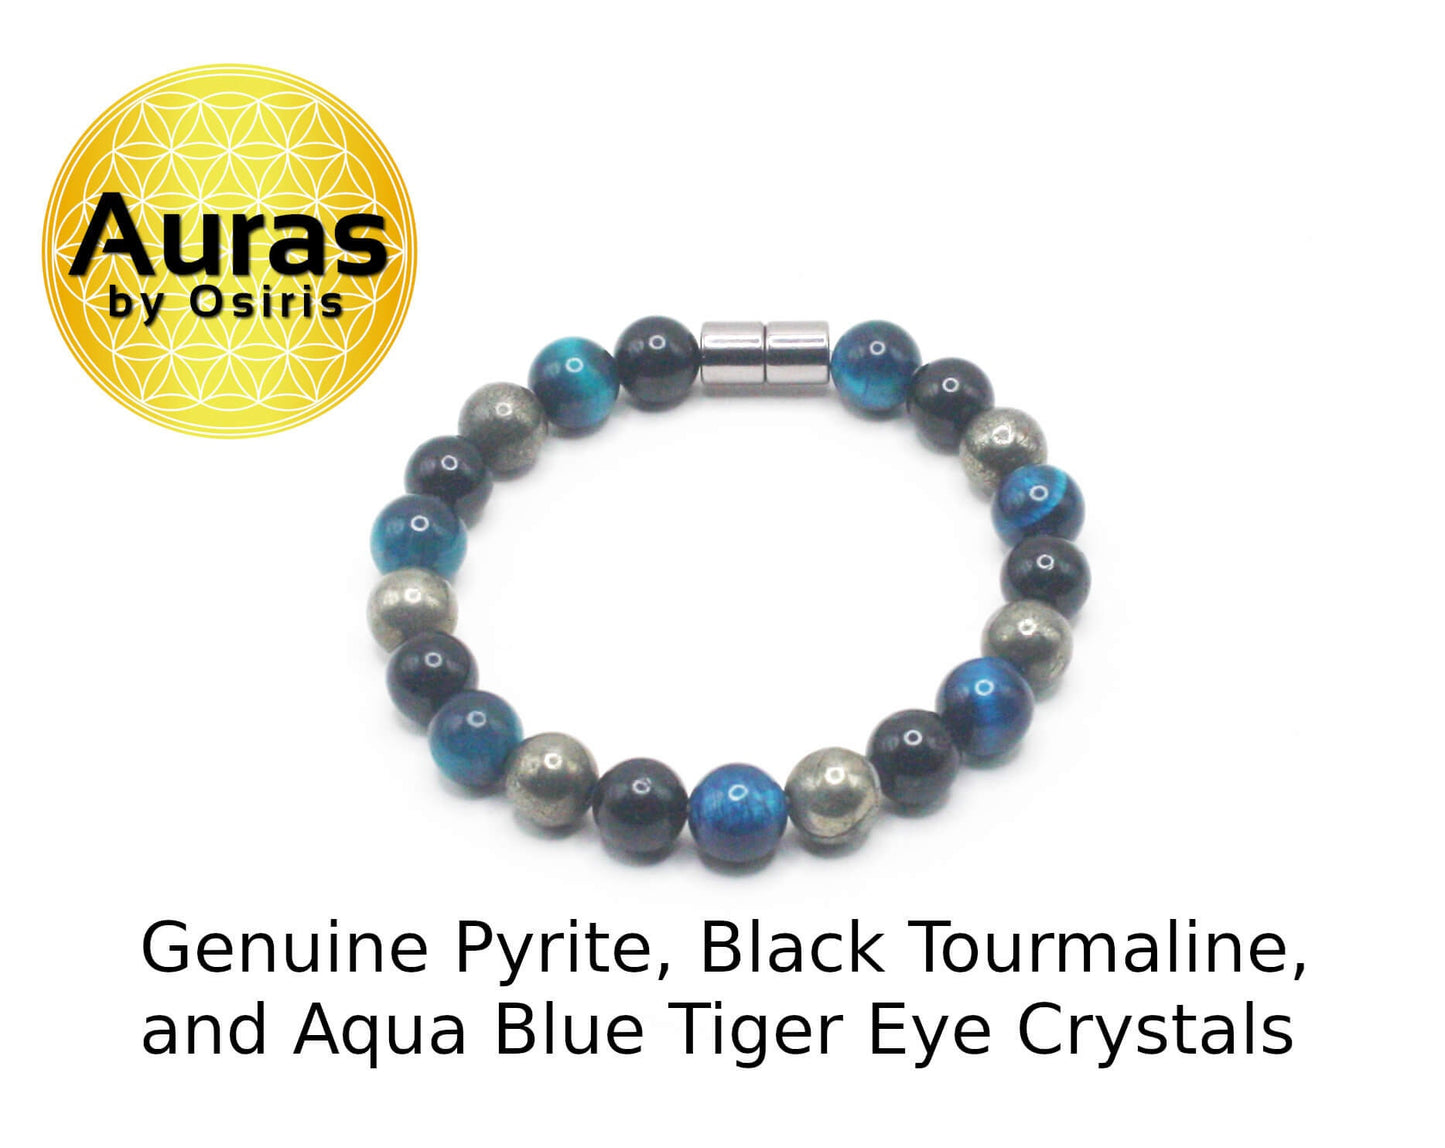 8mm Triple Protection Bracelet for women/men Genuine Gemstone Bracelet - Black Tourmaline - Aqua Blue Tiger Eye - Pyrite Strong Magnet Clasp